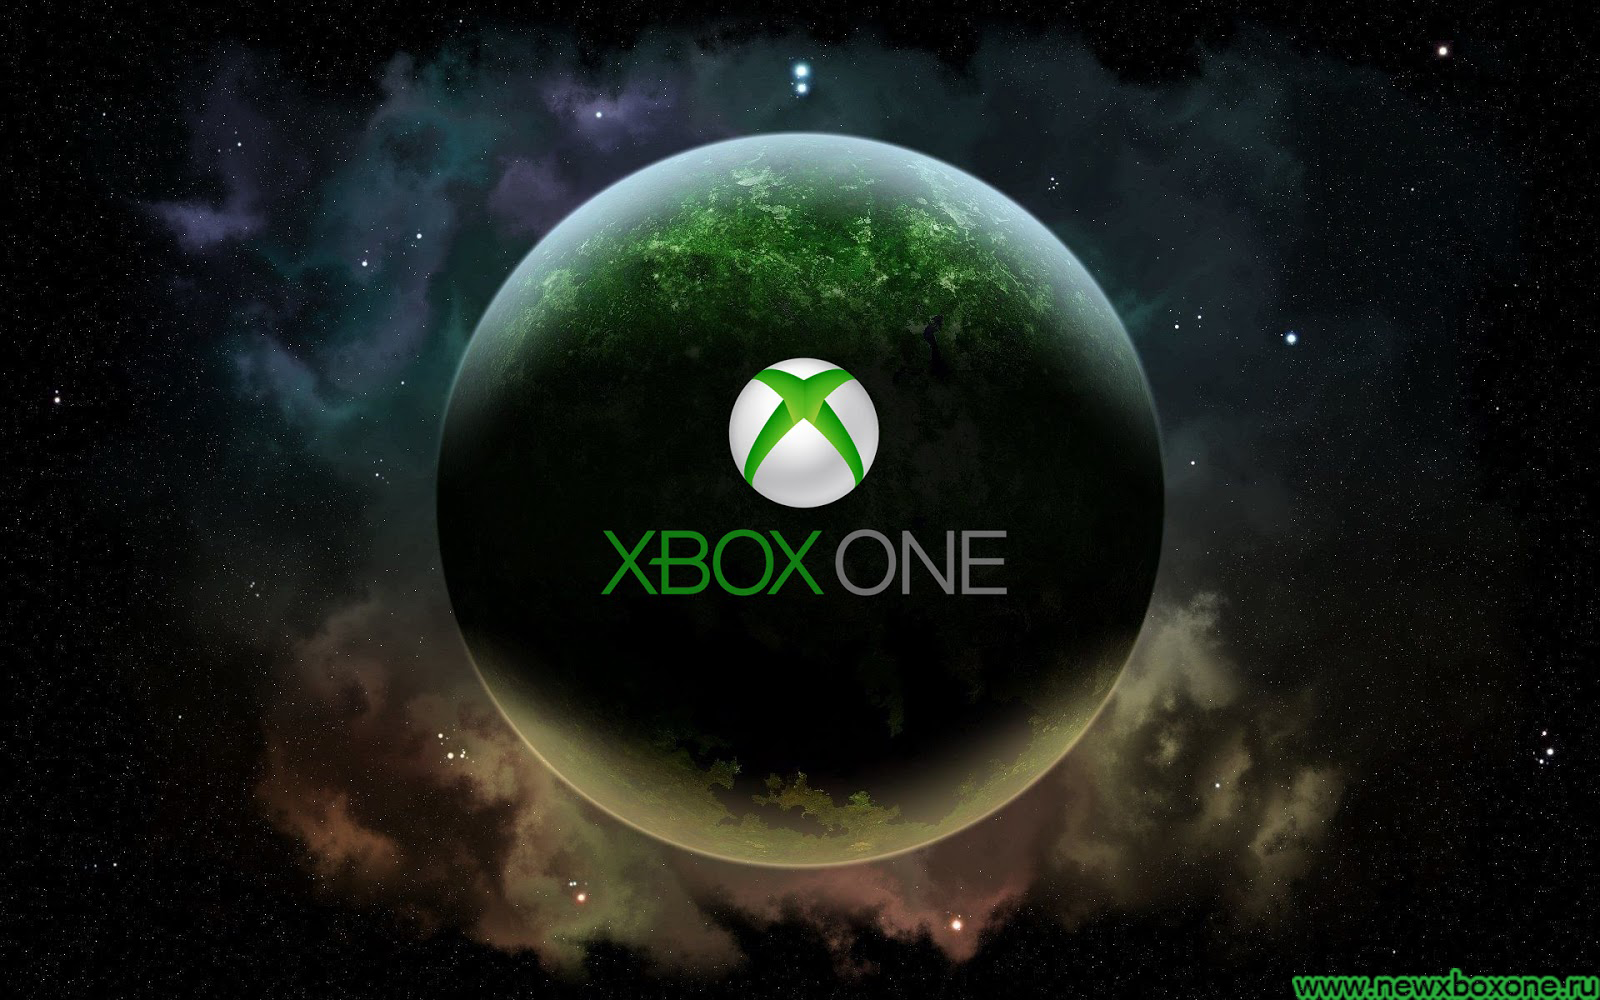 Поспешила ли компания Microsoft с выпуском Xbox One?: с сайта NEWXBOXONE.RU